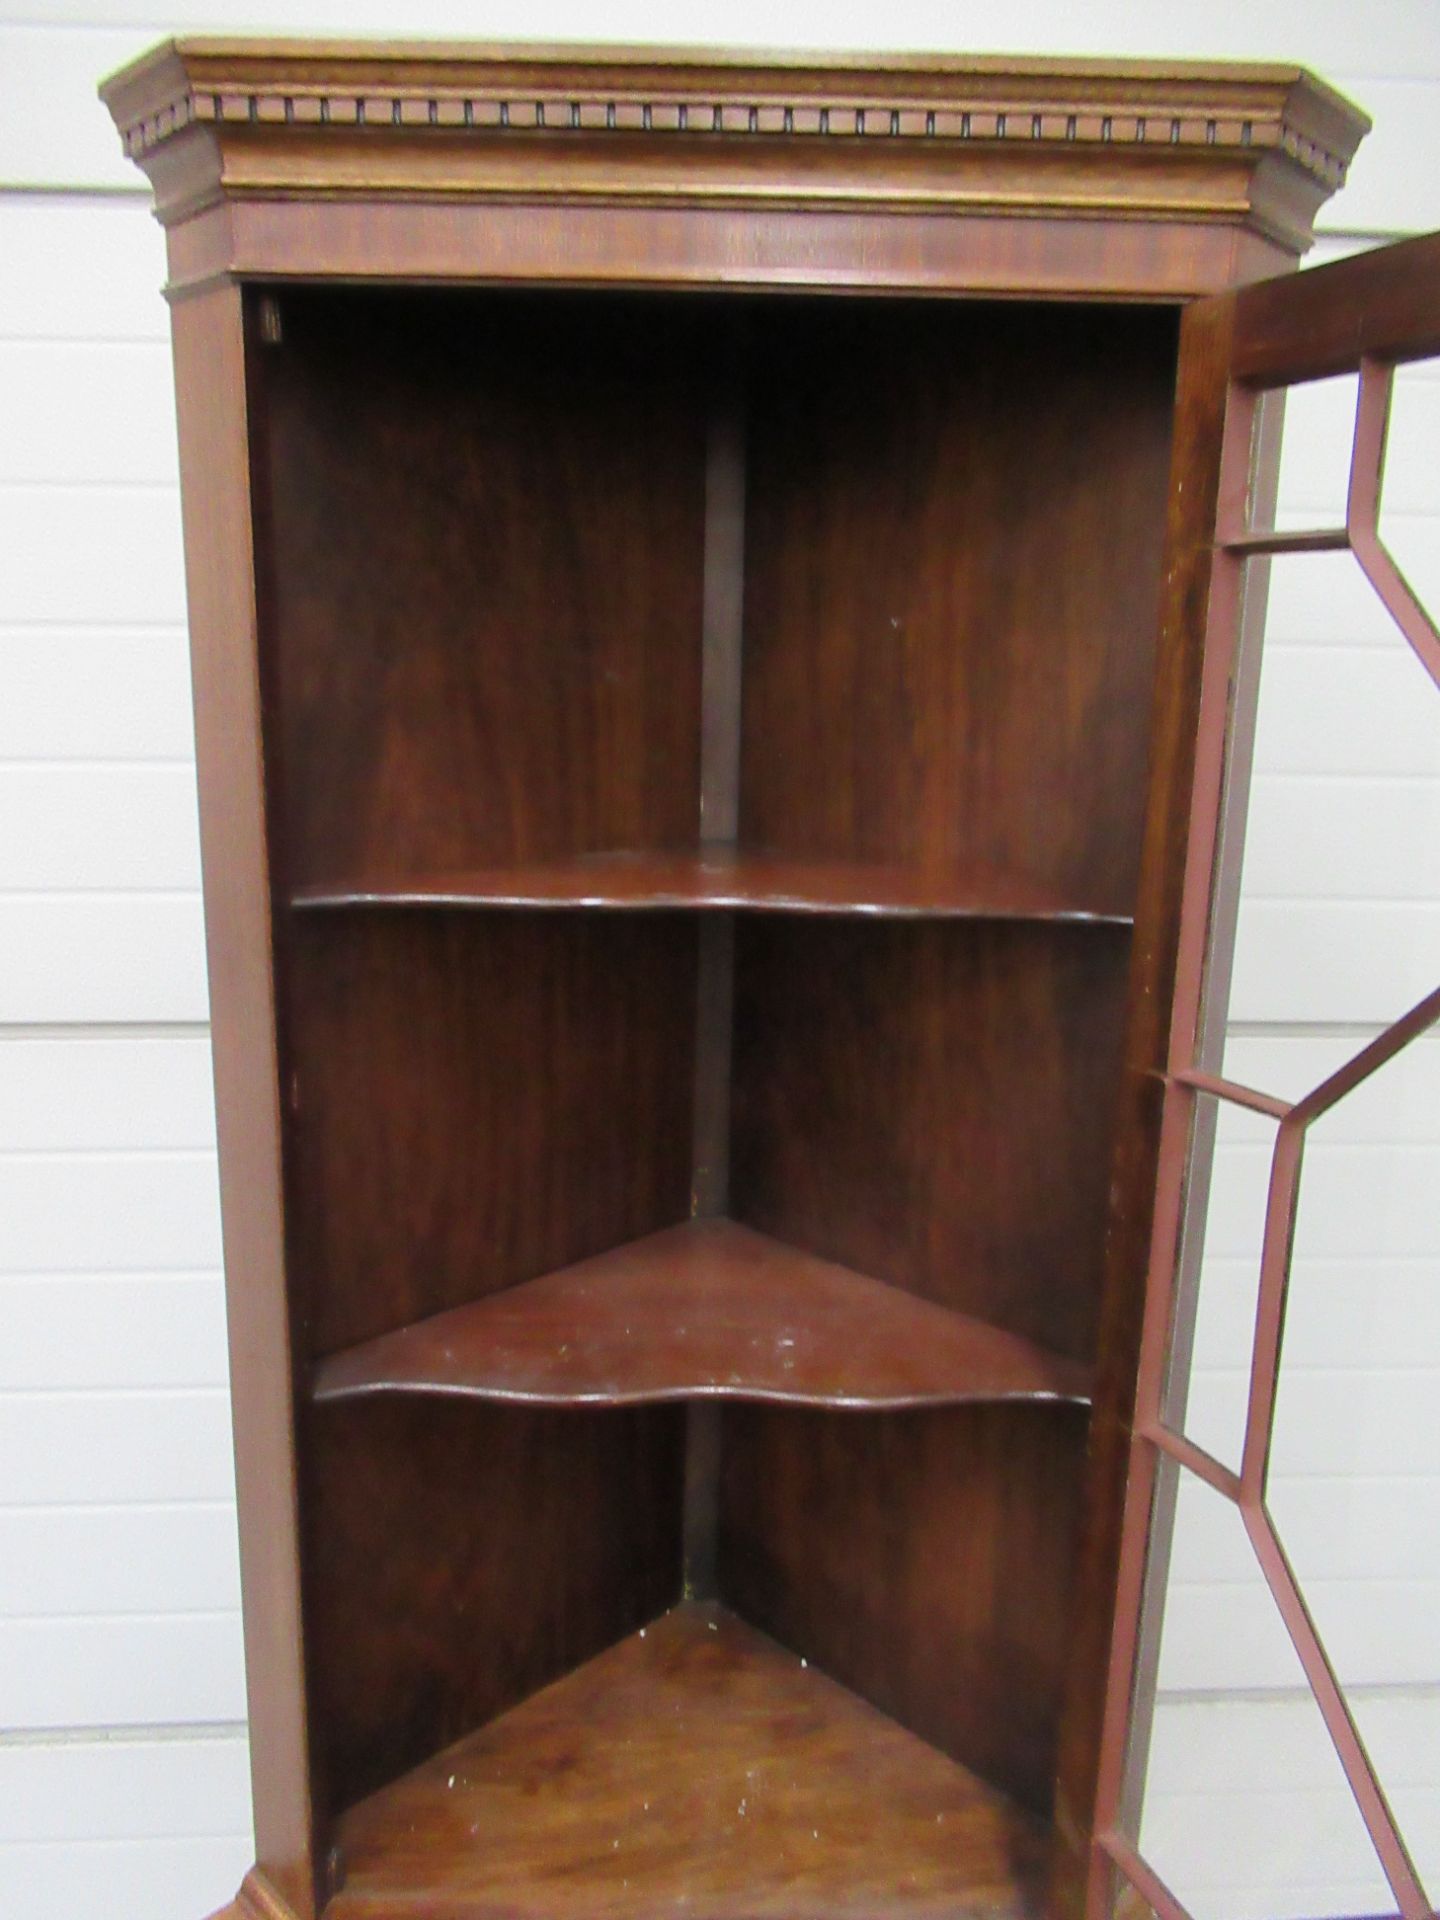 Mahogany Corner Cabinet (65 x 45x 180cm) - Image 4 of 4